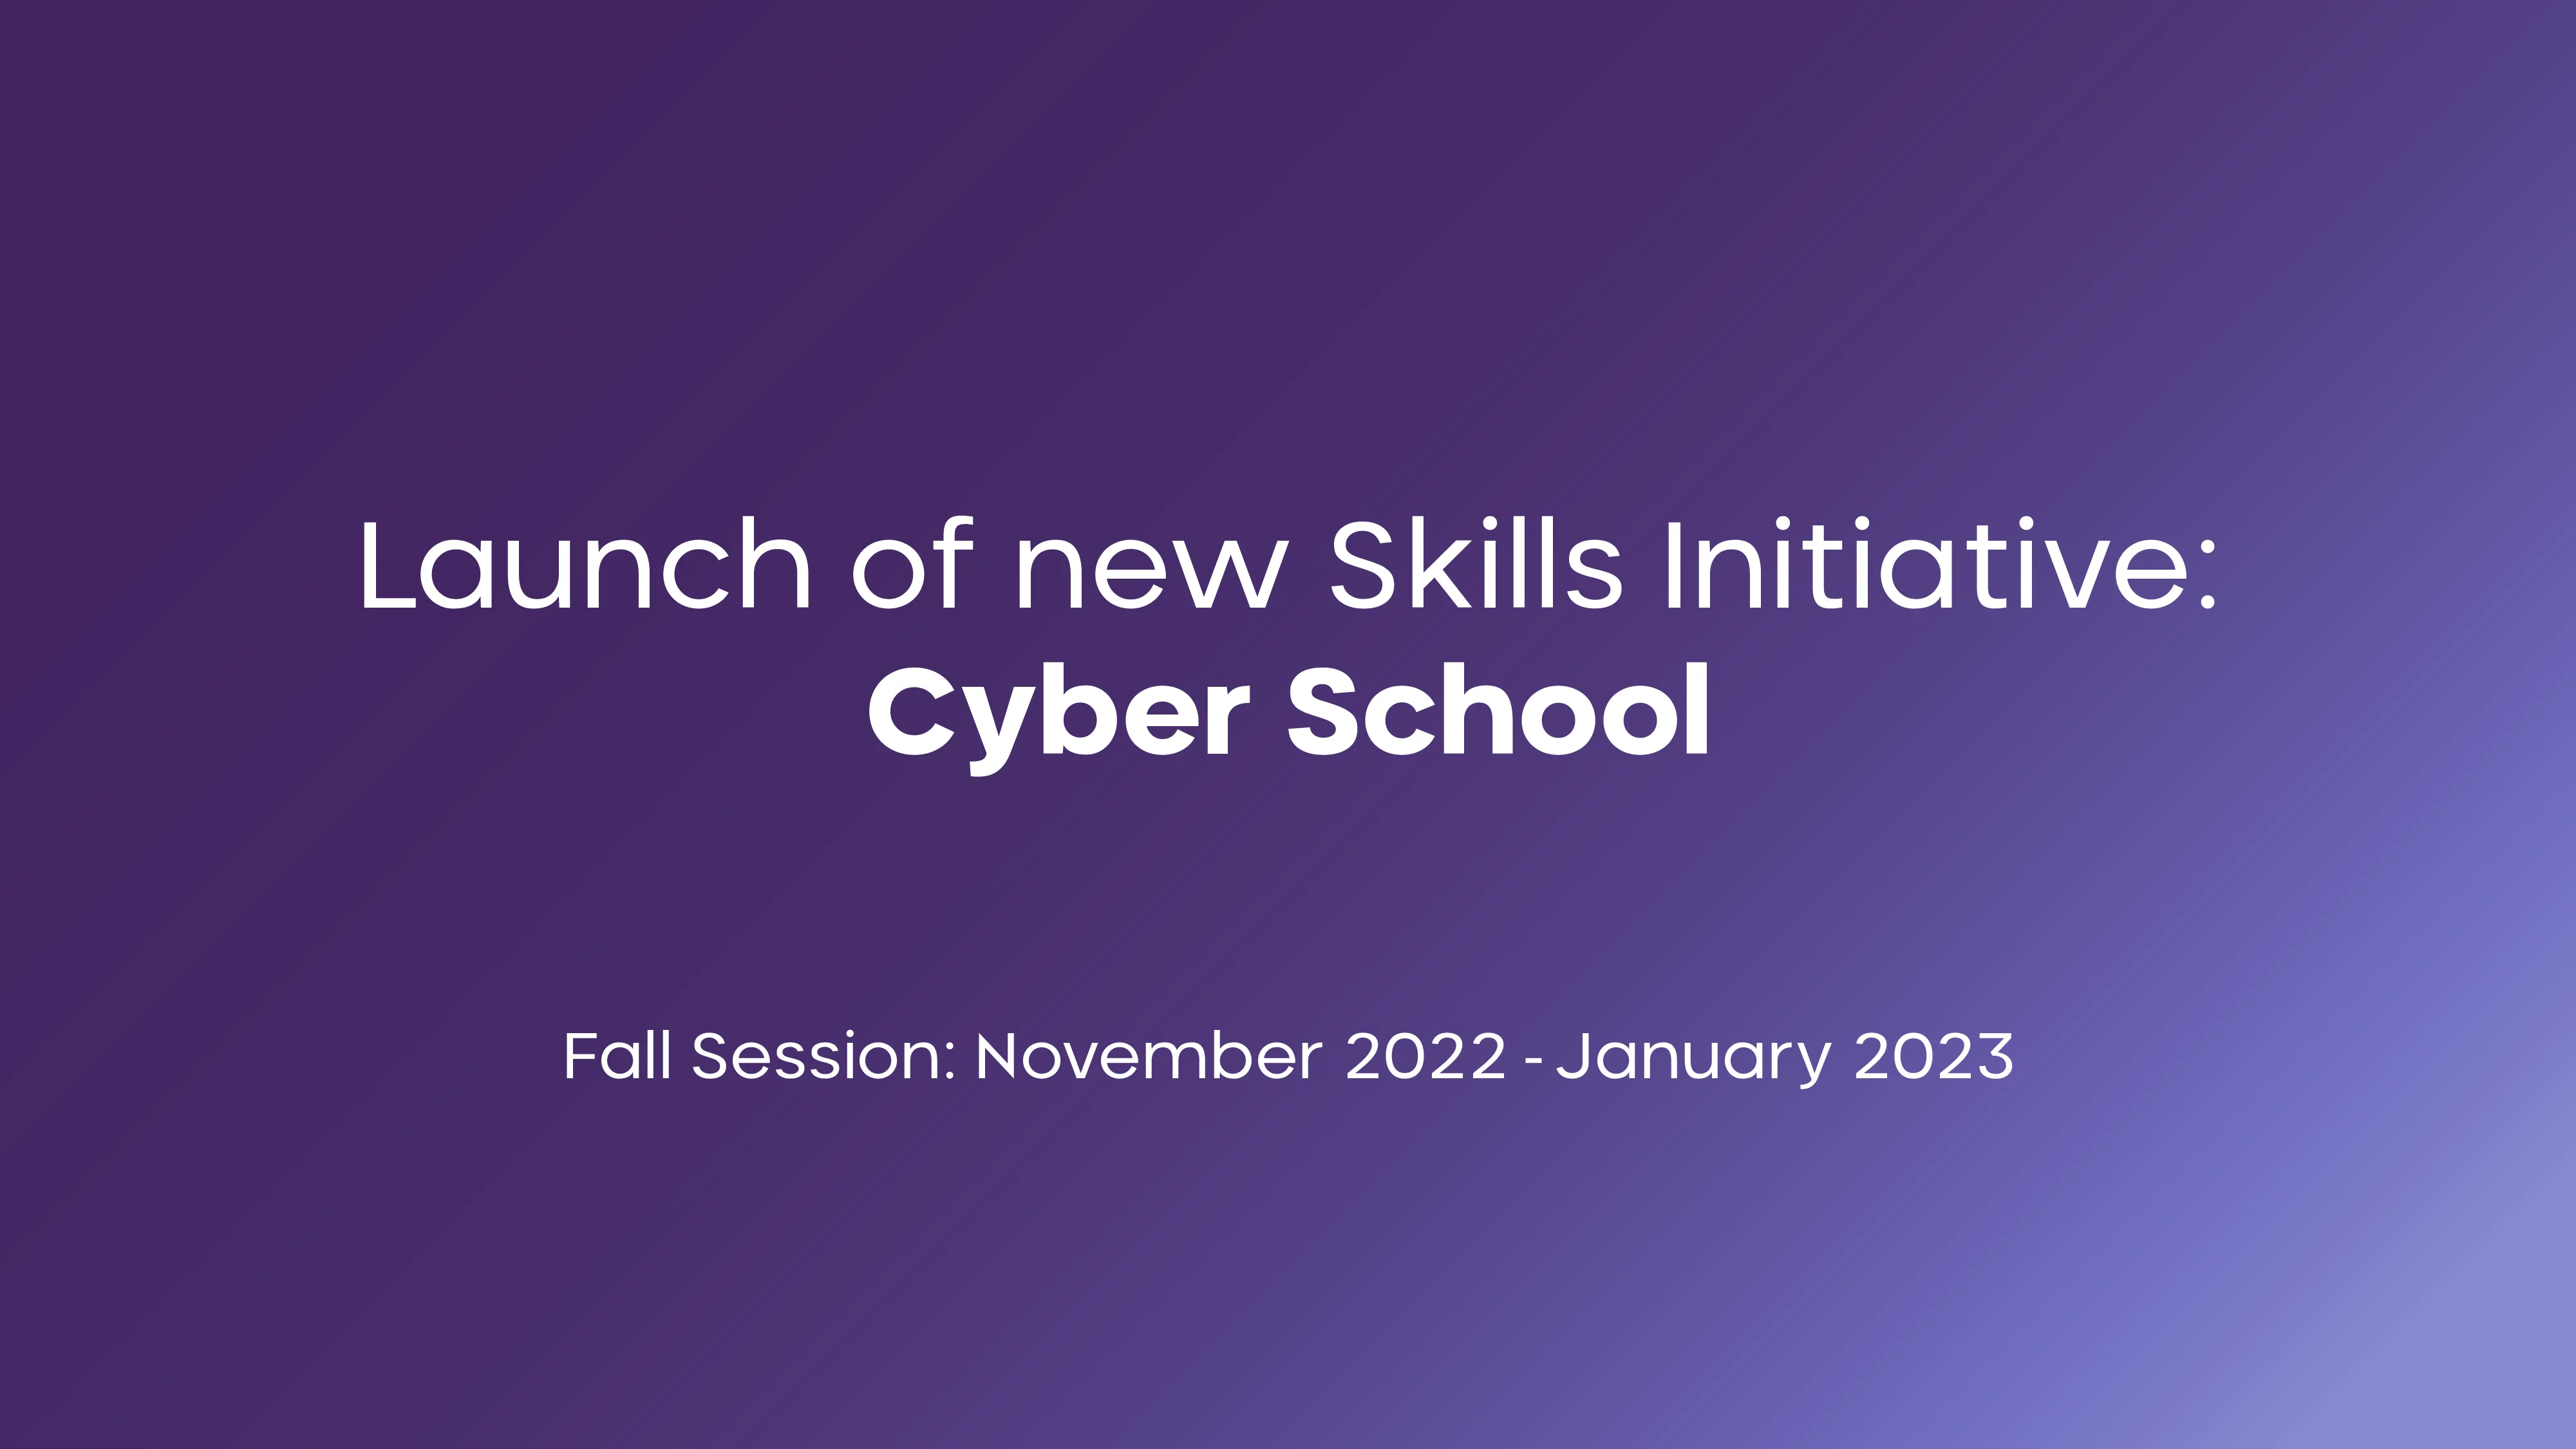 Cyber School: Launch of new Skills Initiative